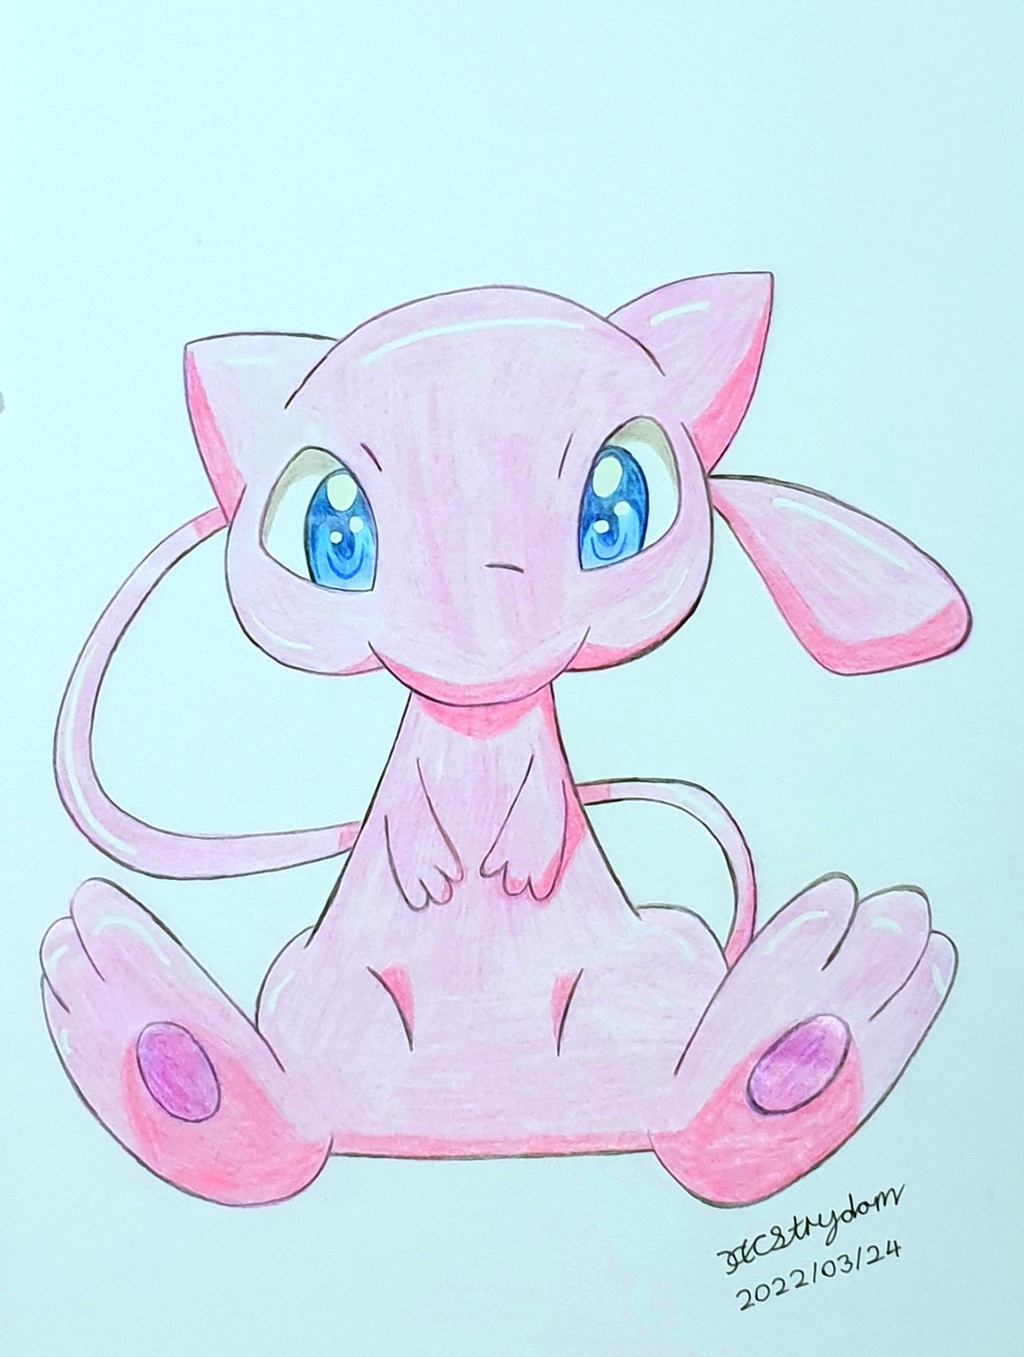 Traditional Doodle - Pokemon Mew!